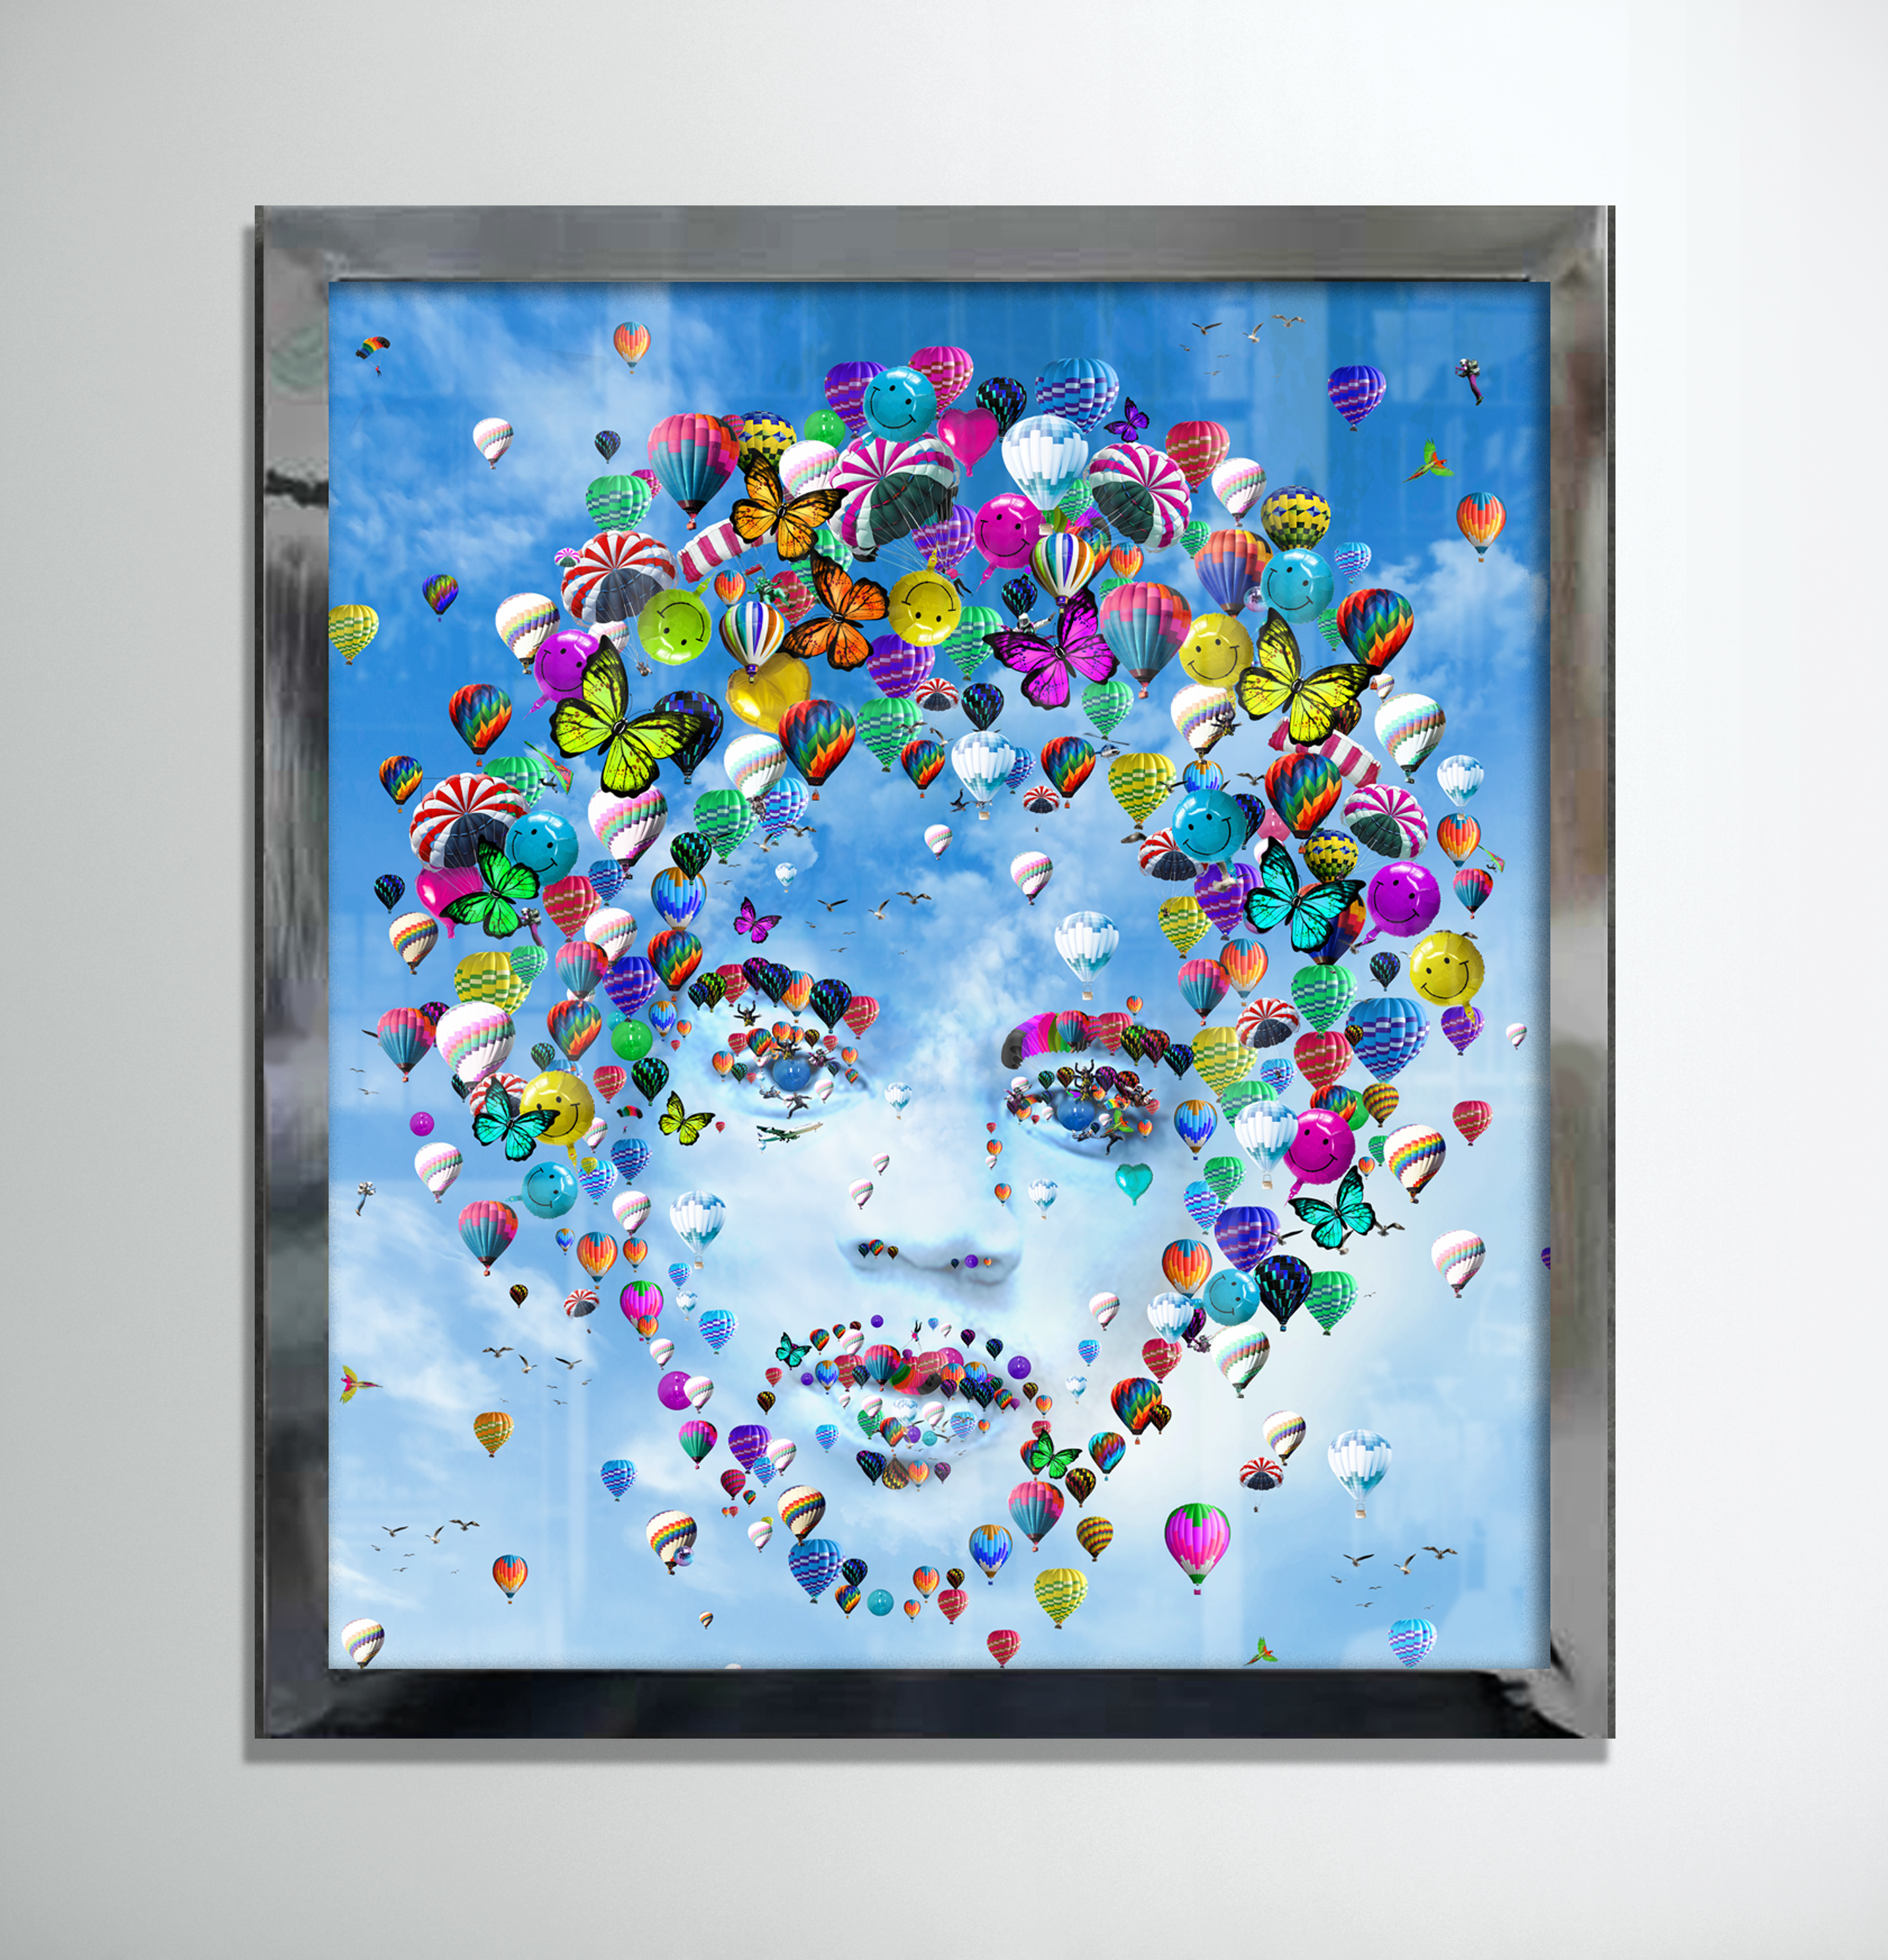 Jimi Hendrix Balloons by Iain Alexander | Limited Ediiton